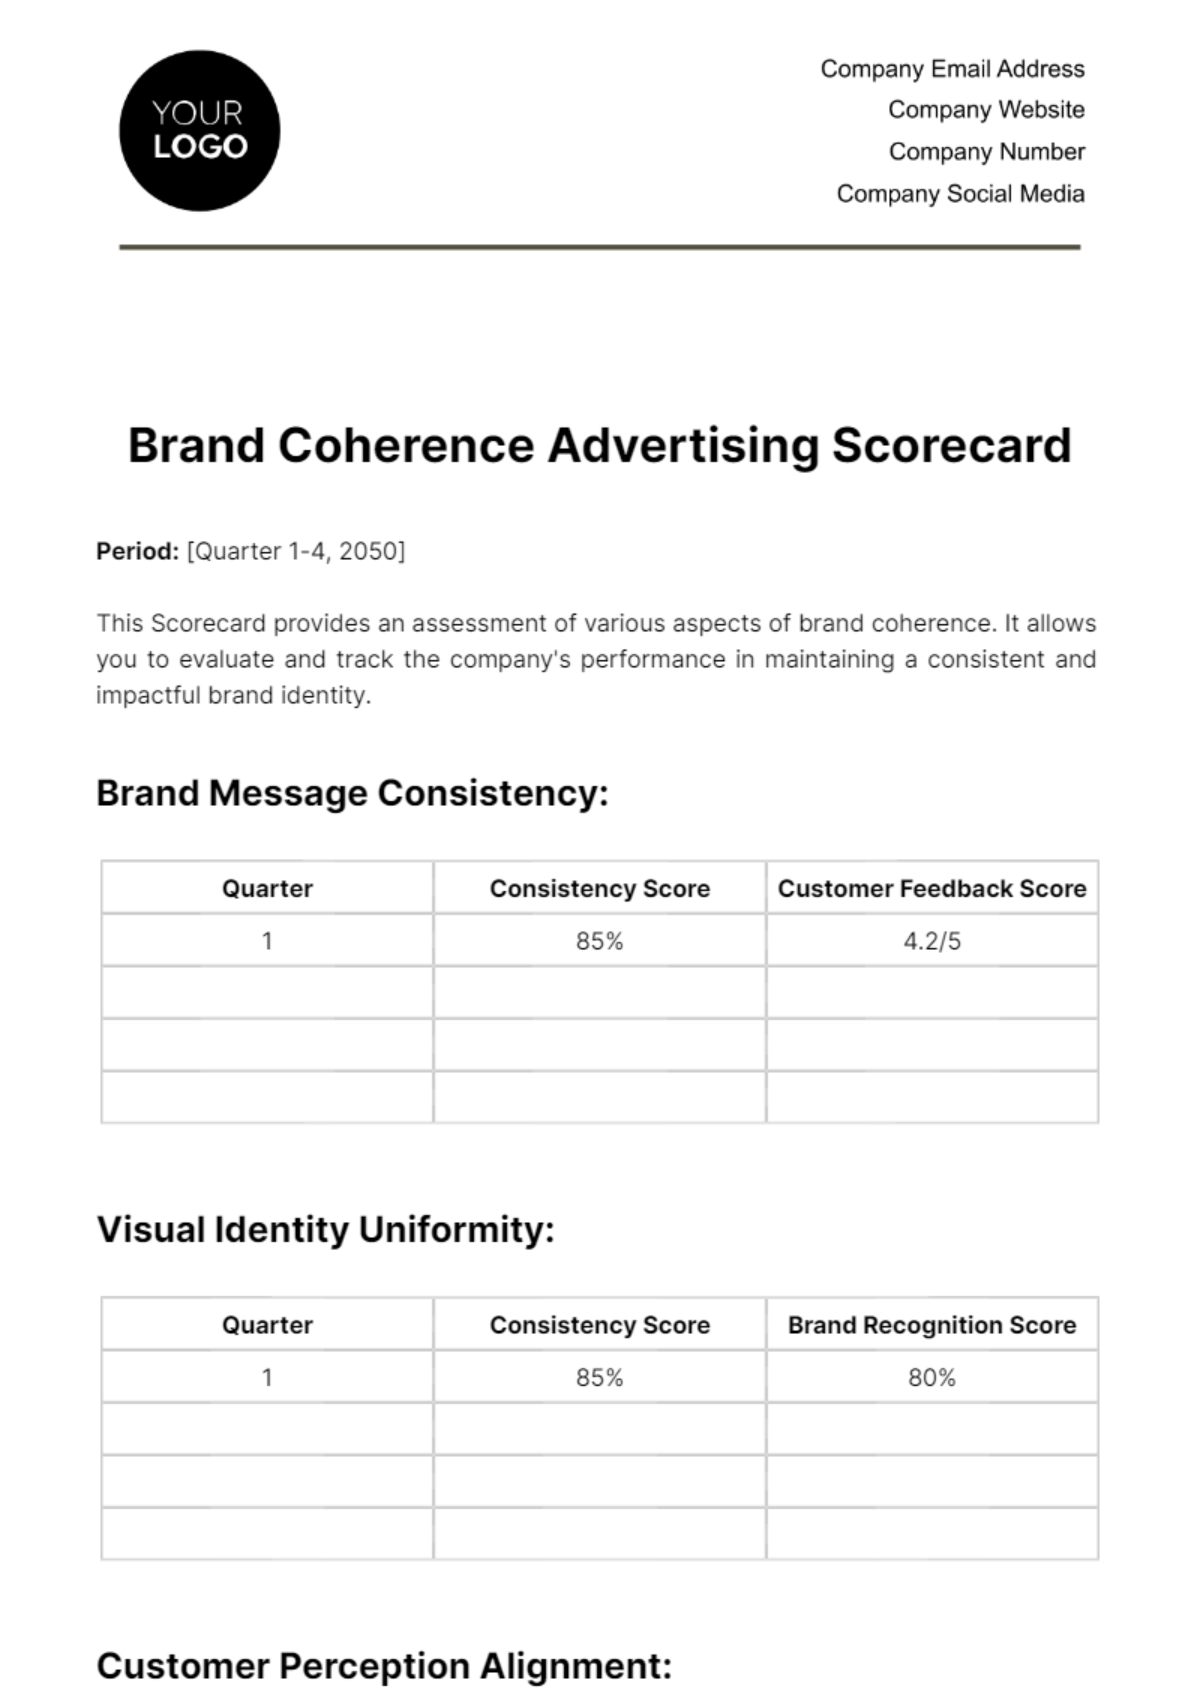 Free Brand Coherence Advertising Scorecard Template